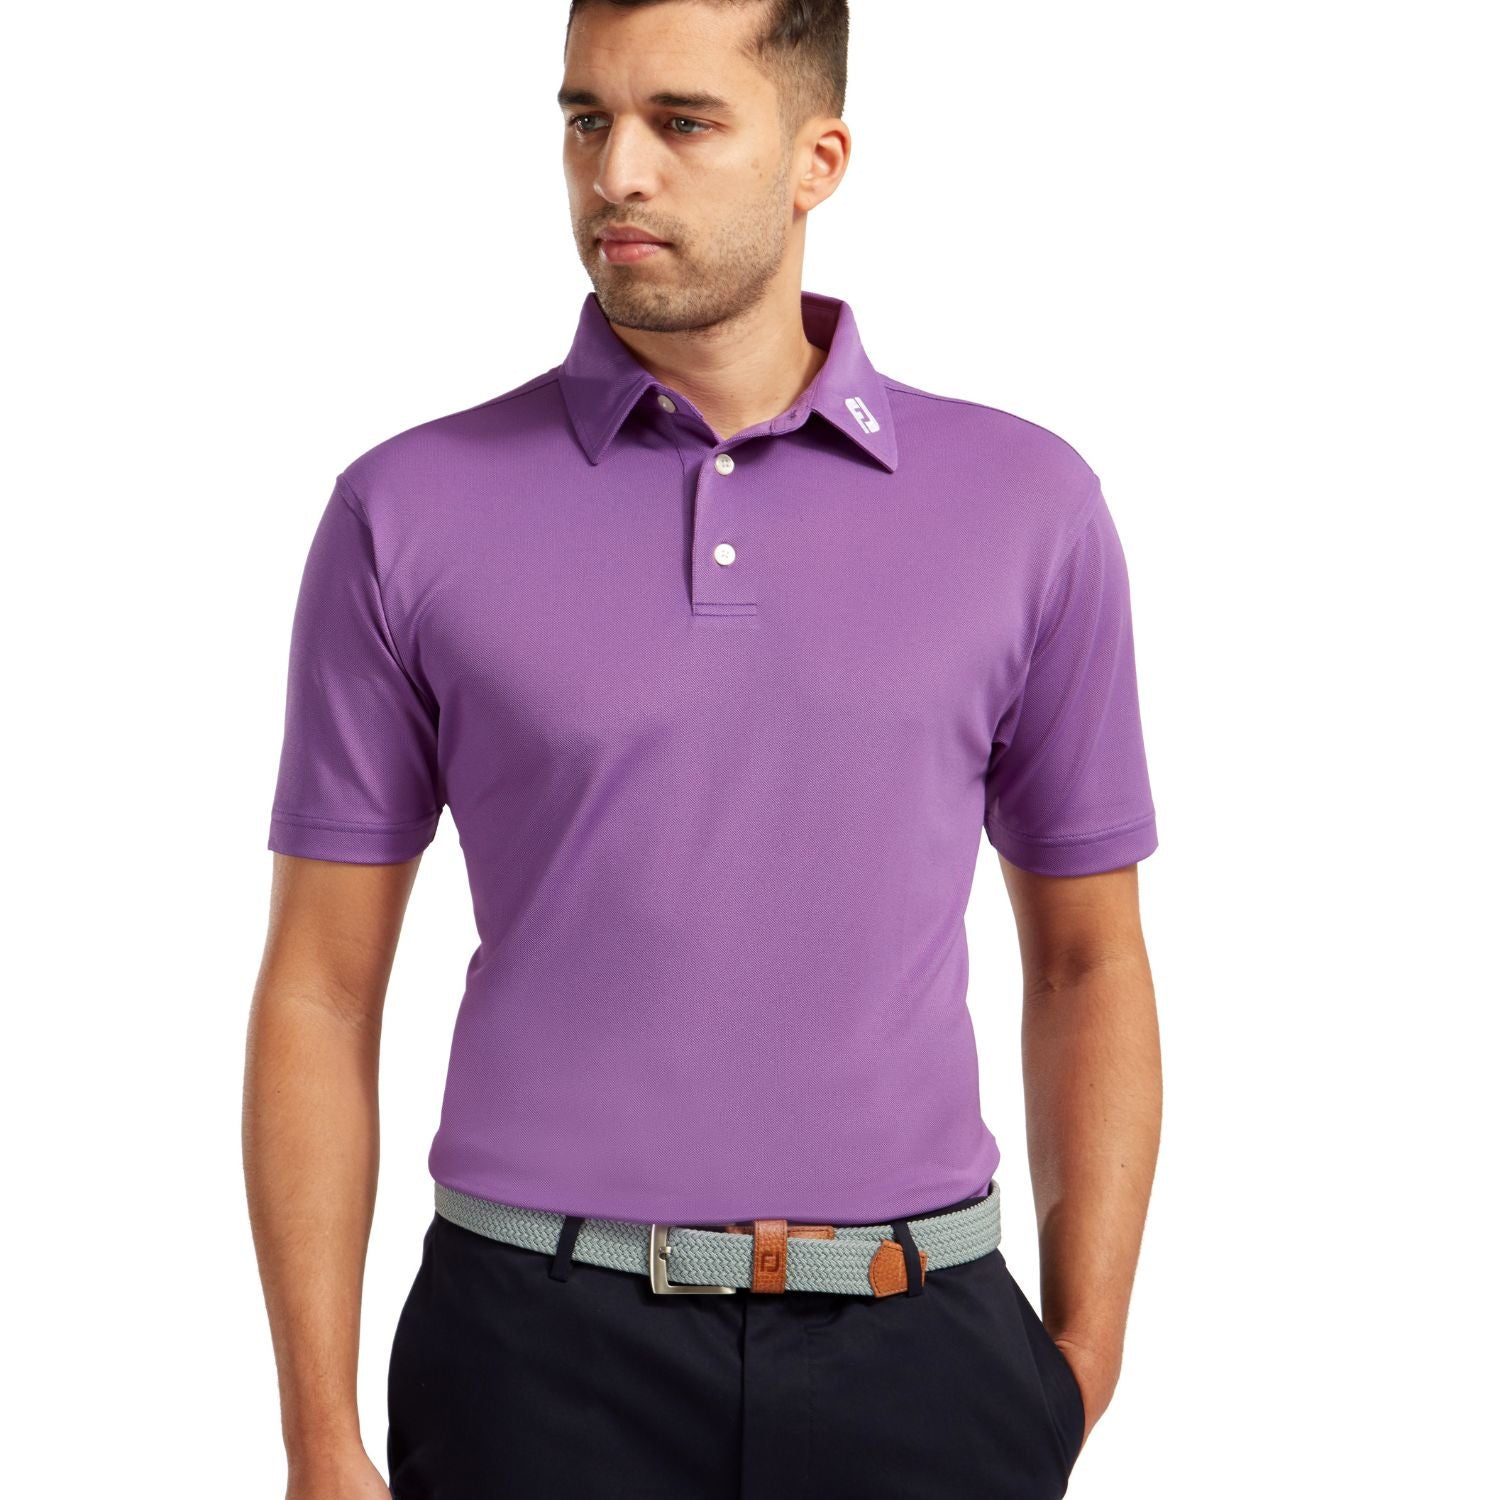 FootJoy Stretch Pique Solid Golf Polo Shirt